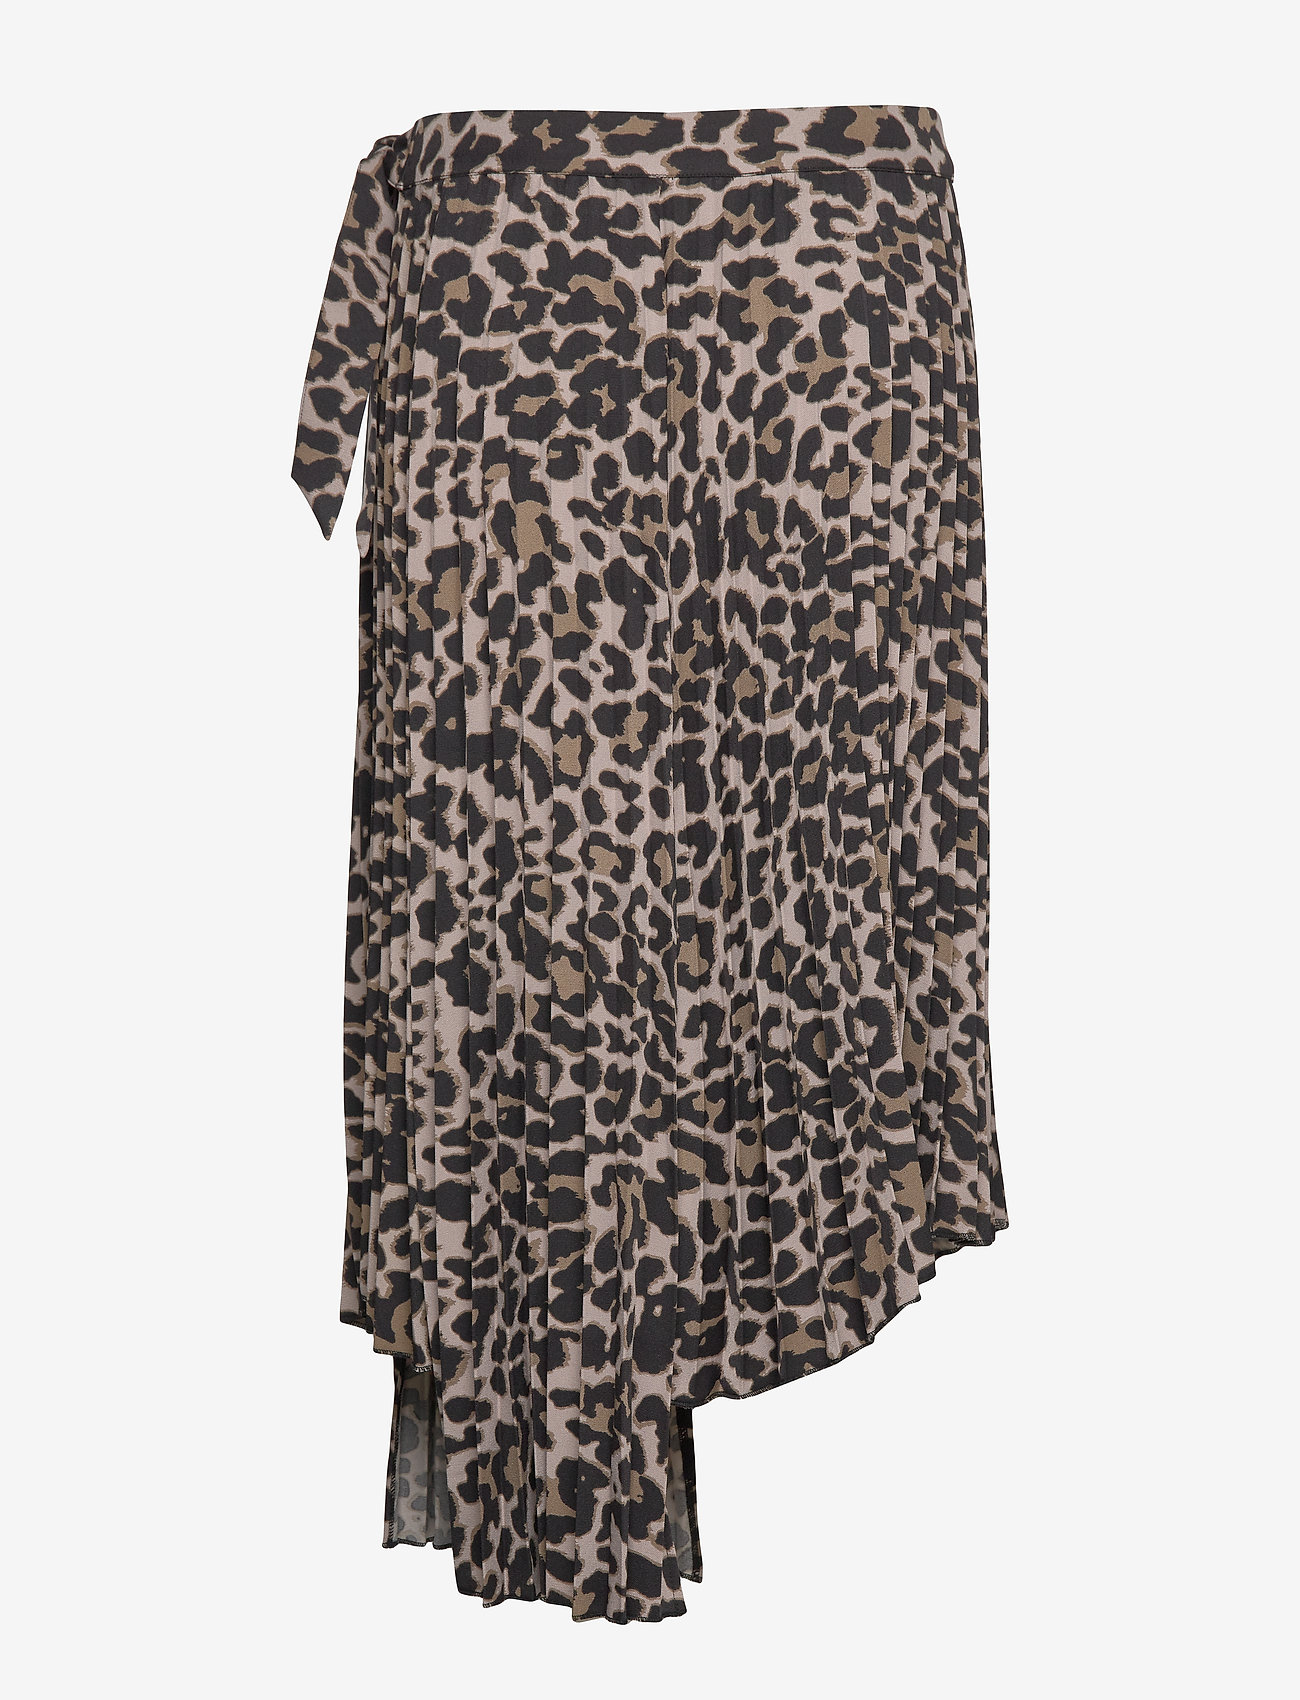 Sofie Schnoor - Skirt - midi kjolar - leopard - 1